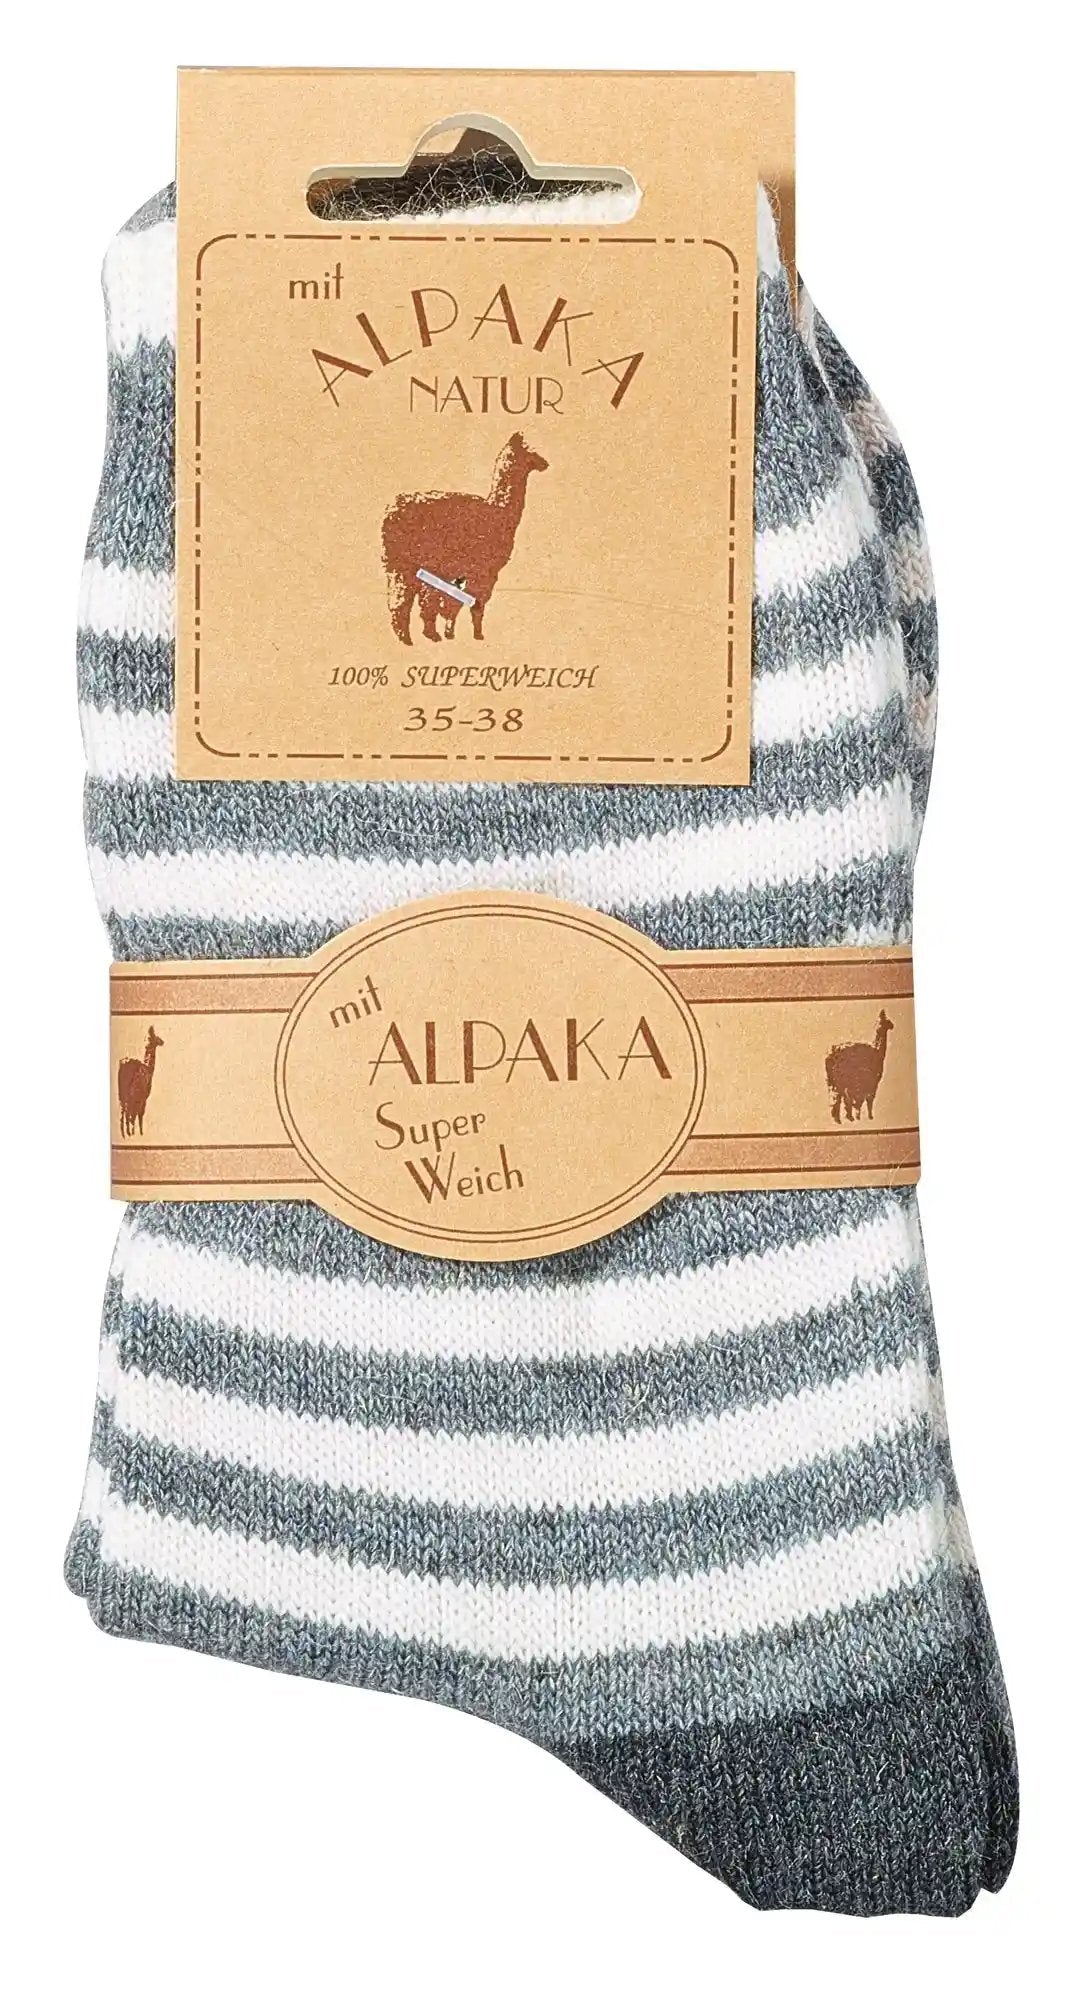 2 pairs of alpaca socks with alpaca wool for children, teenagers, women